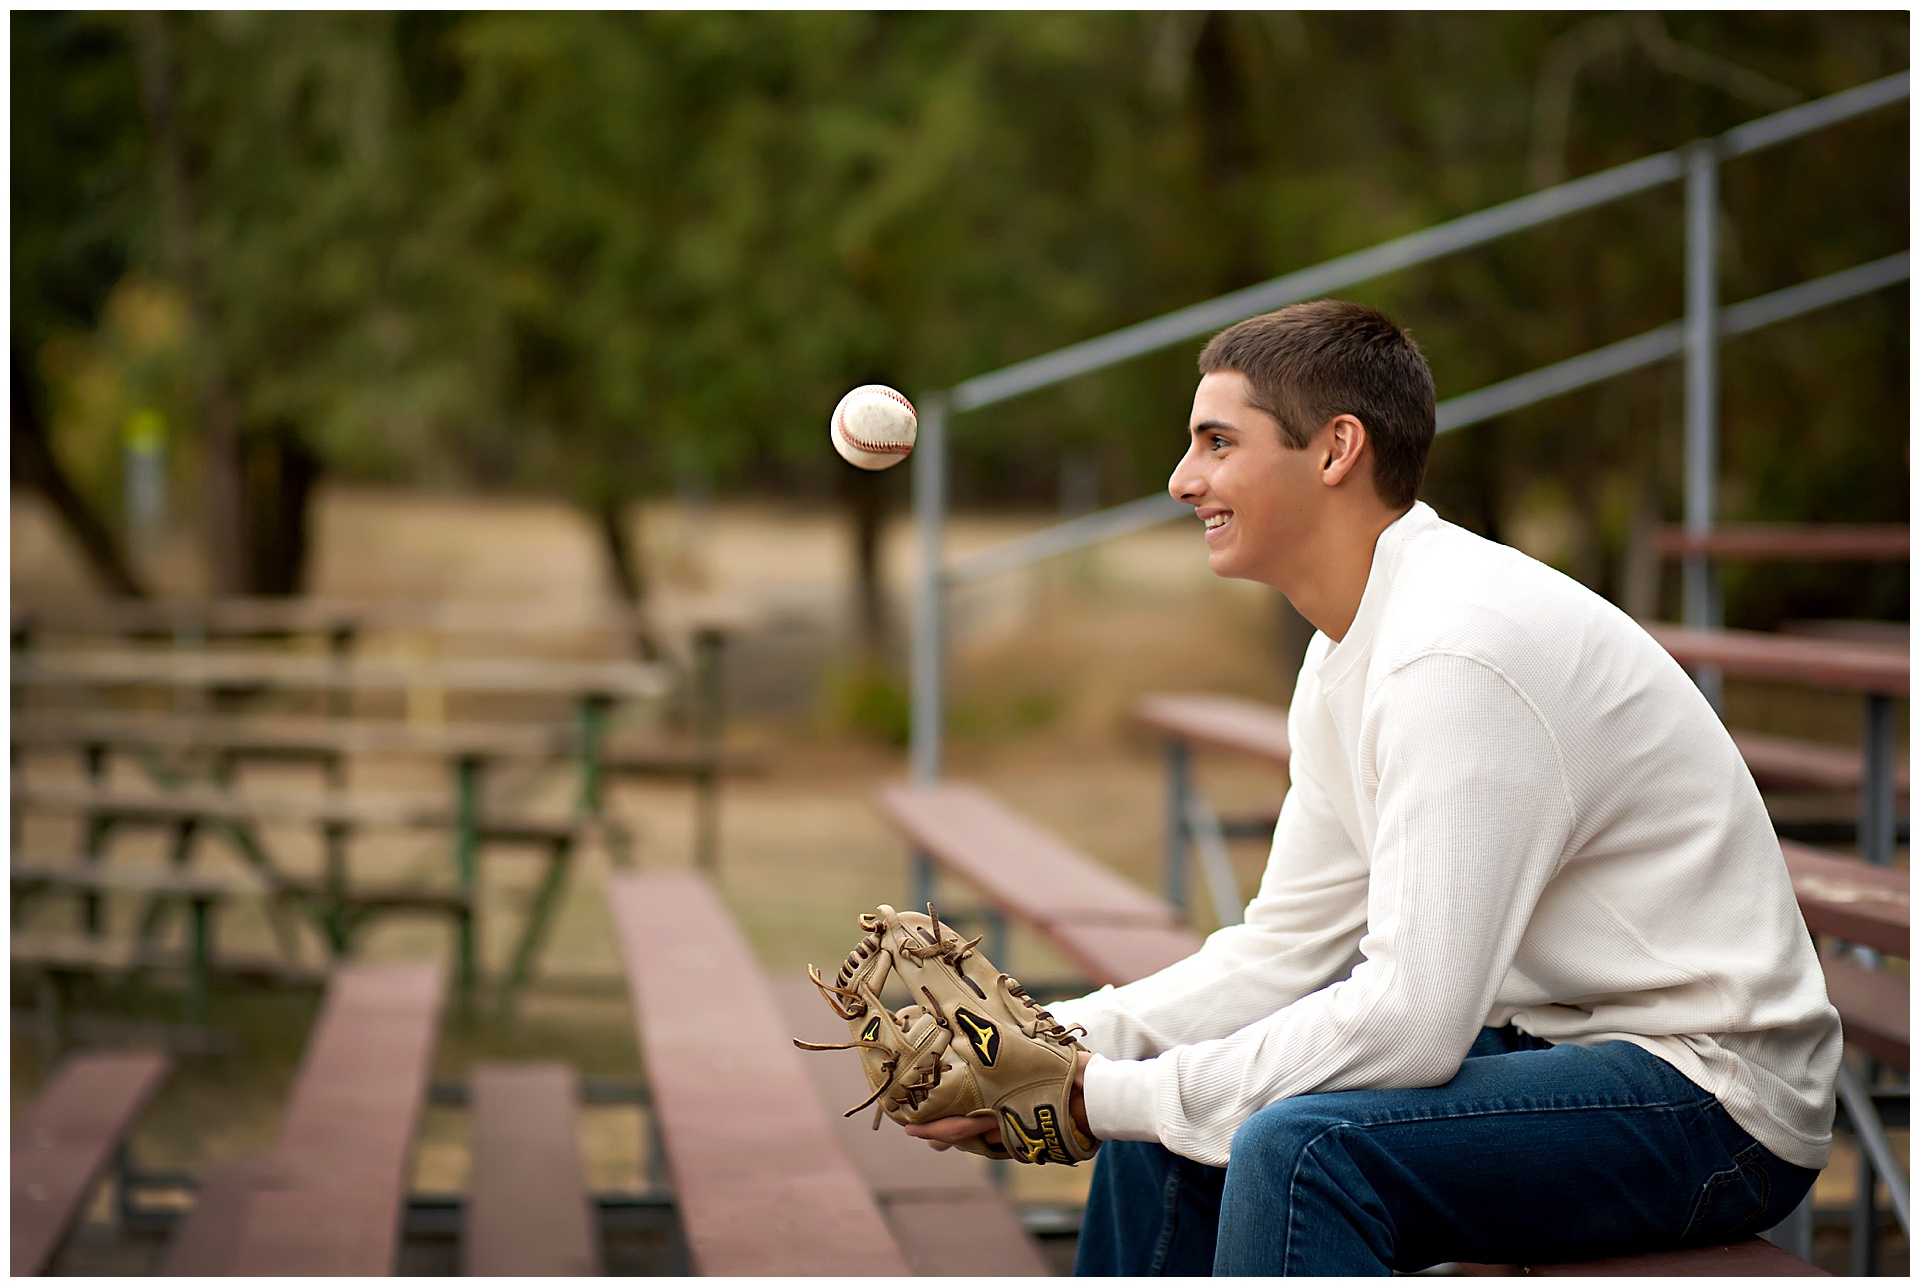 Senior portrait with baseball by Gig Harbor photographer Alison Smith